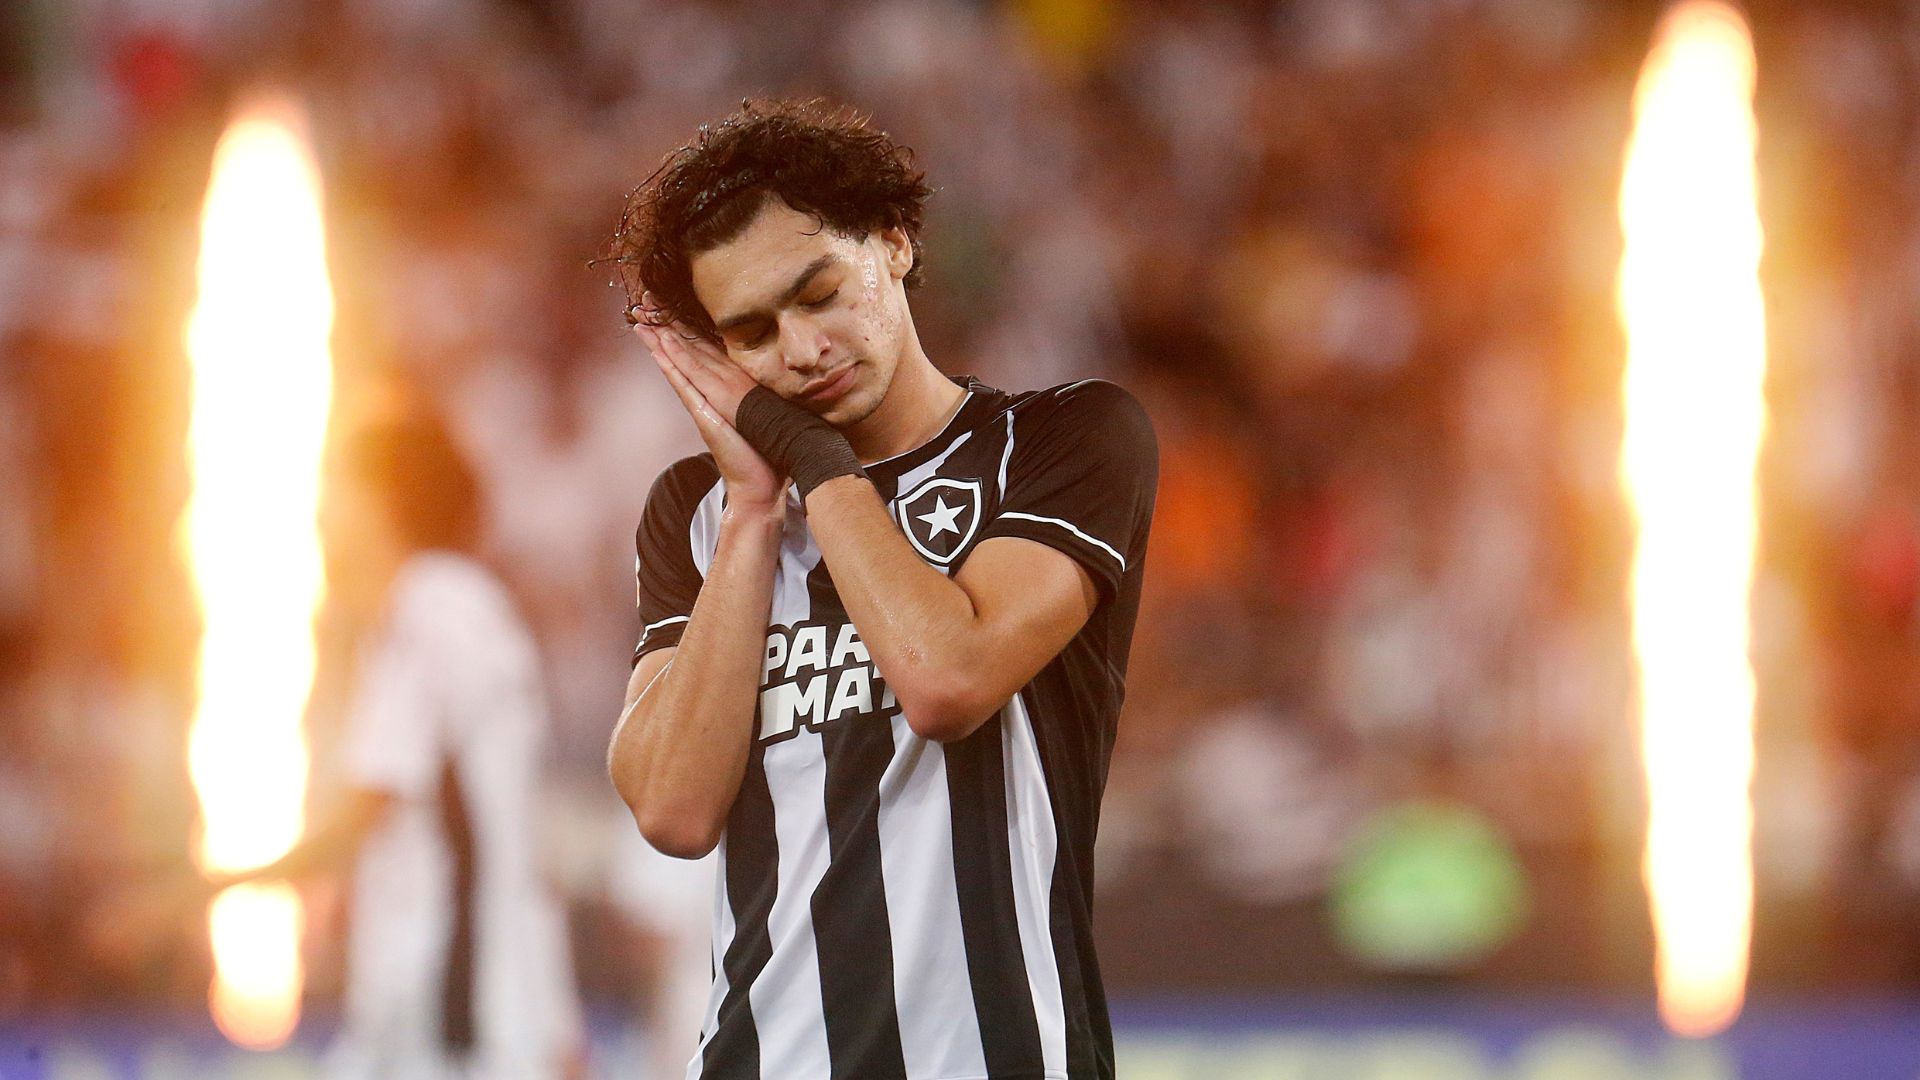 Celebration of Matheus Nascimento after the goal scored (Credit: Vitor Silva / Botafogo)